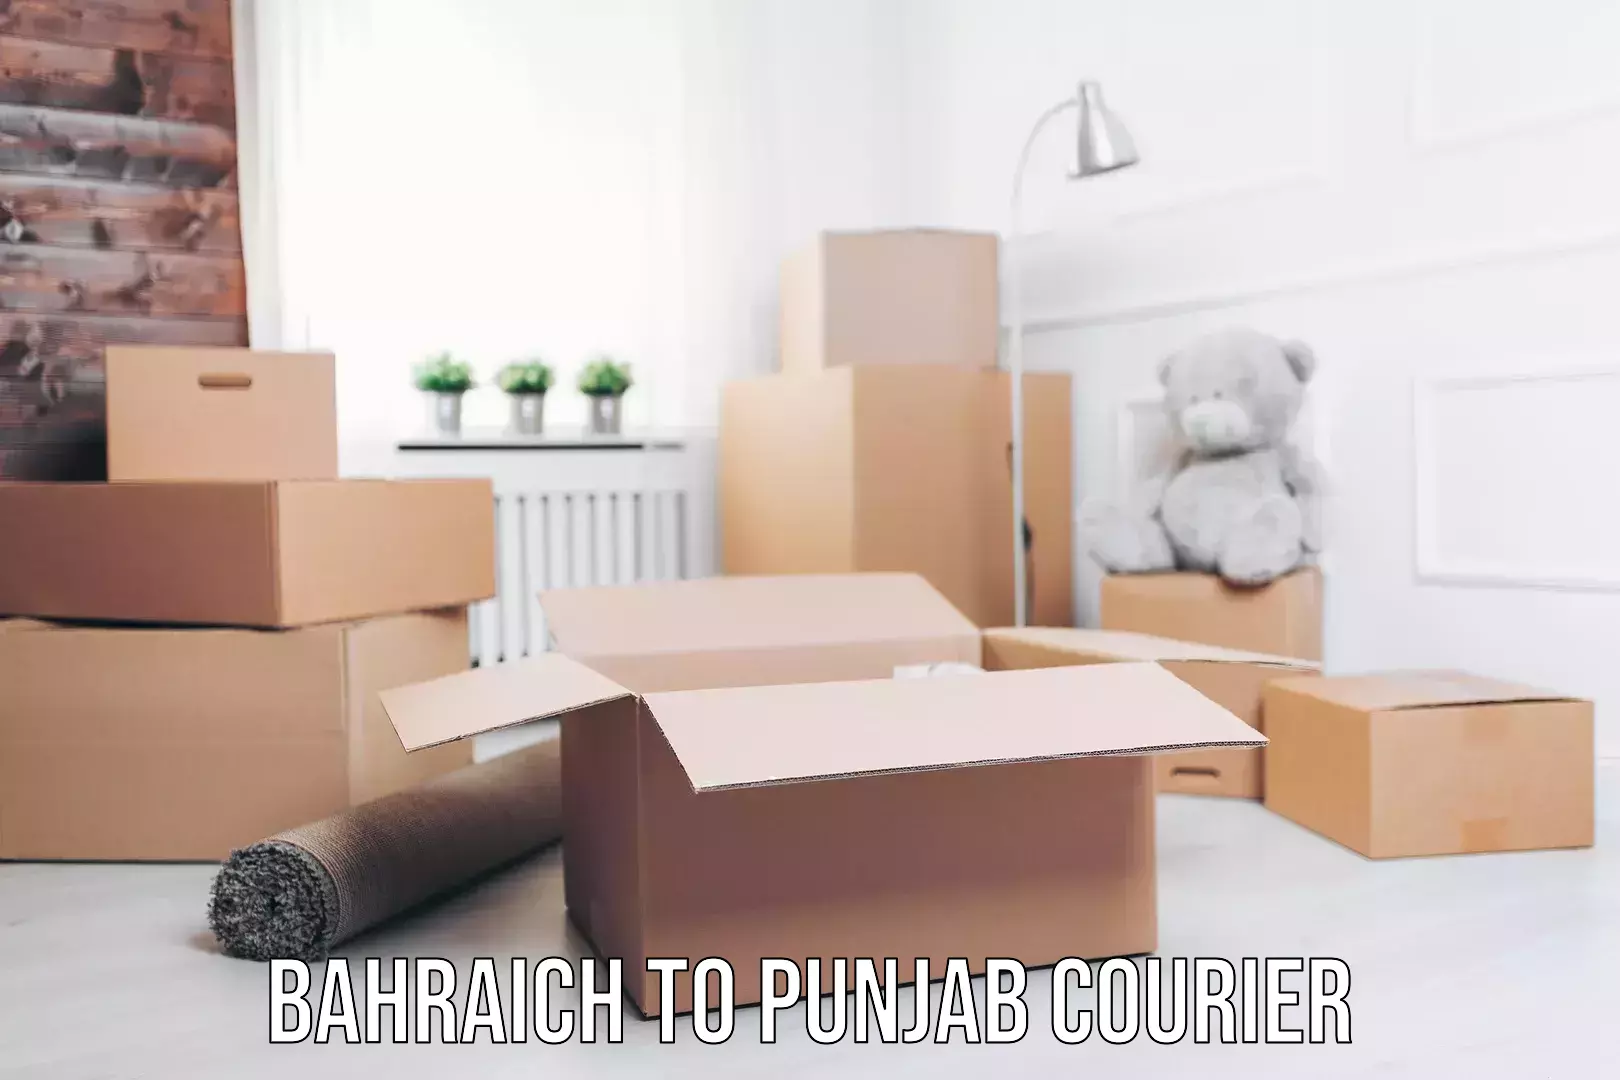 Courier service partnerships Bahraich to Punjab